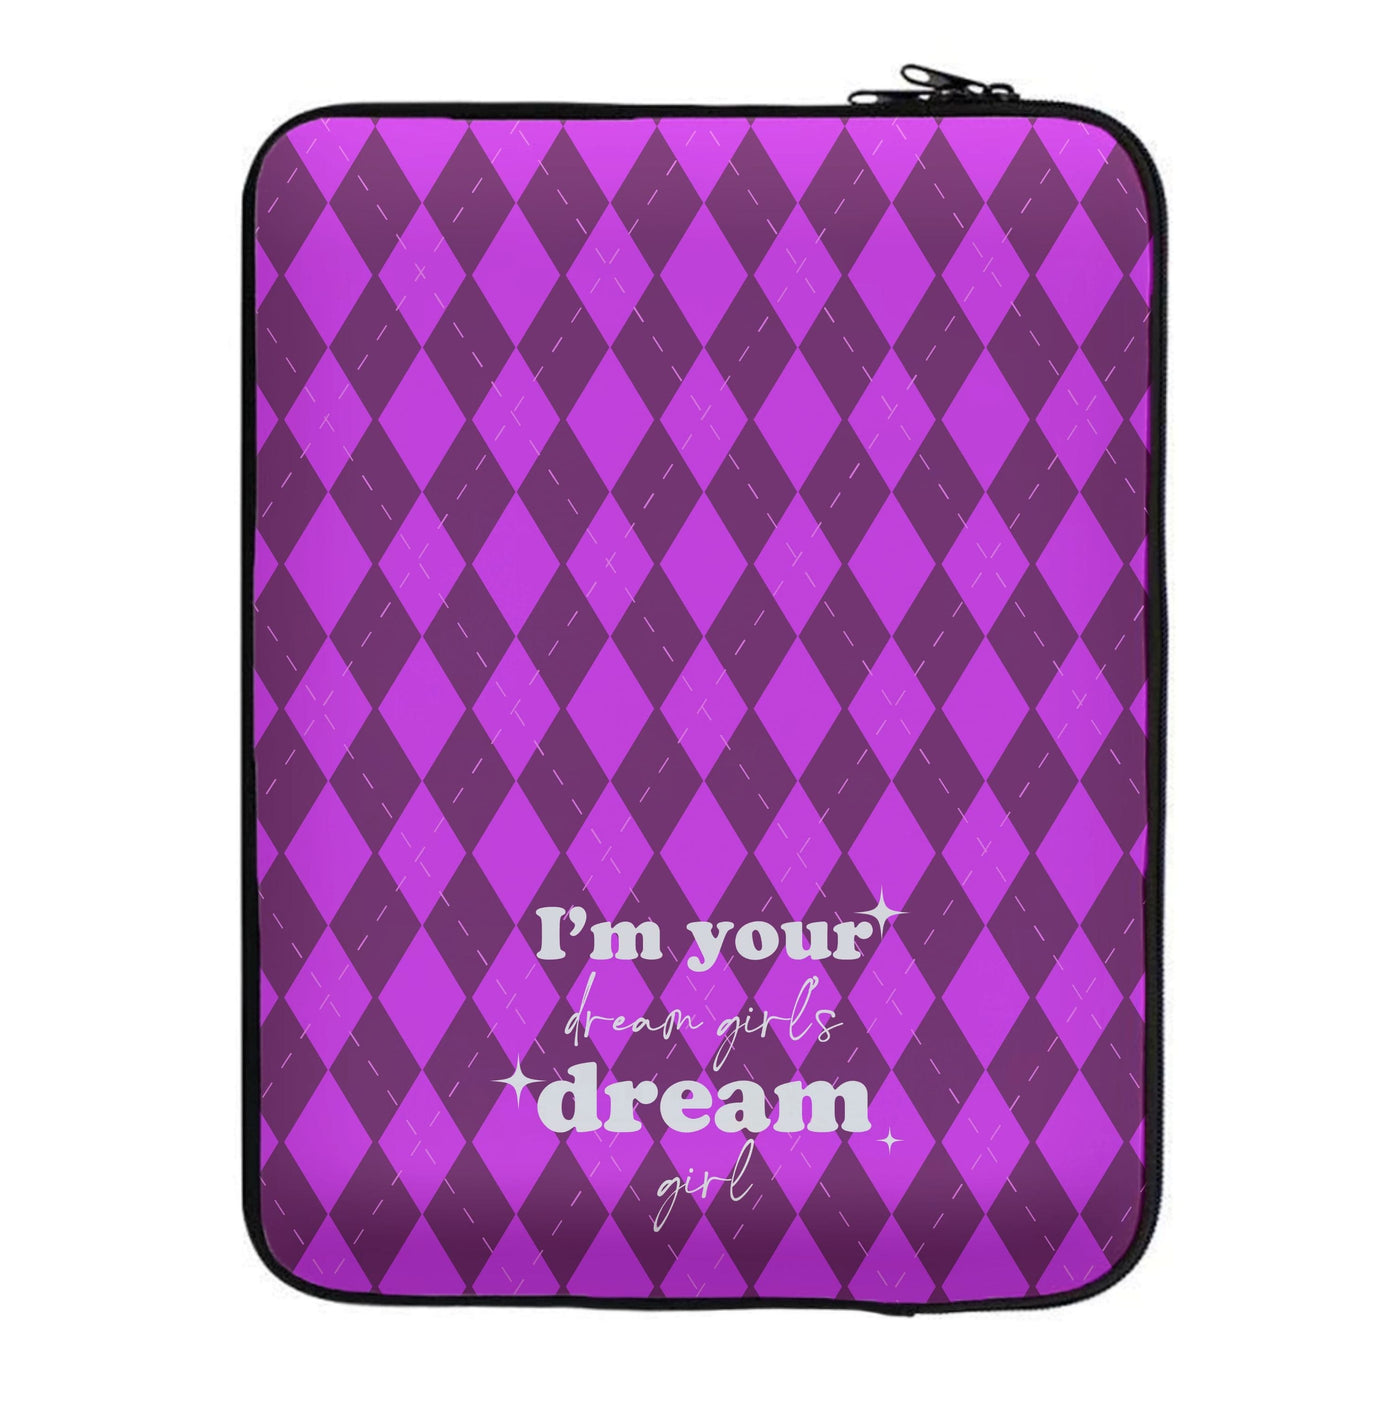 I'm Your Dream Girls Dream Girl - Chappell Roan Laptop Sleeve